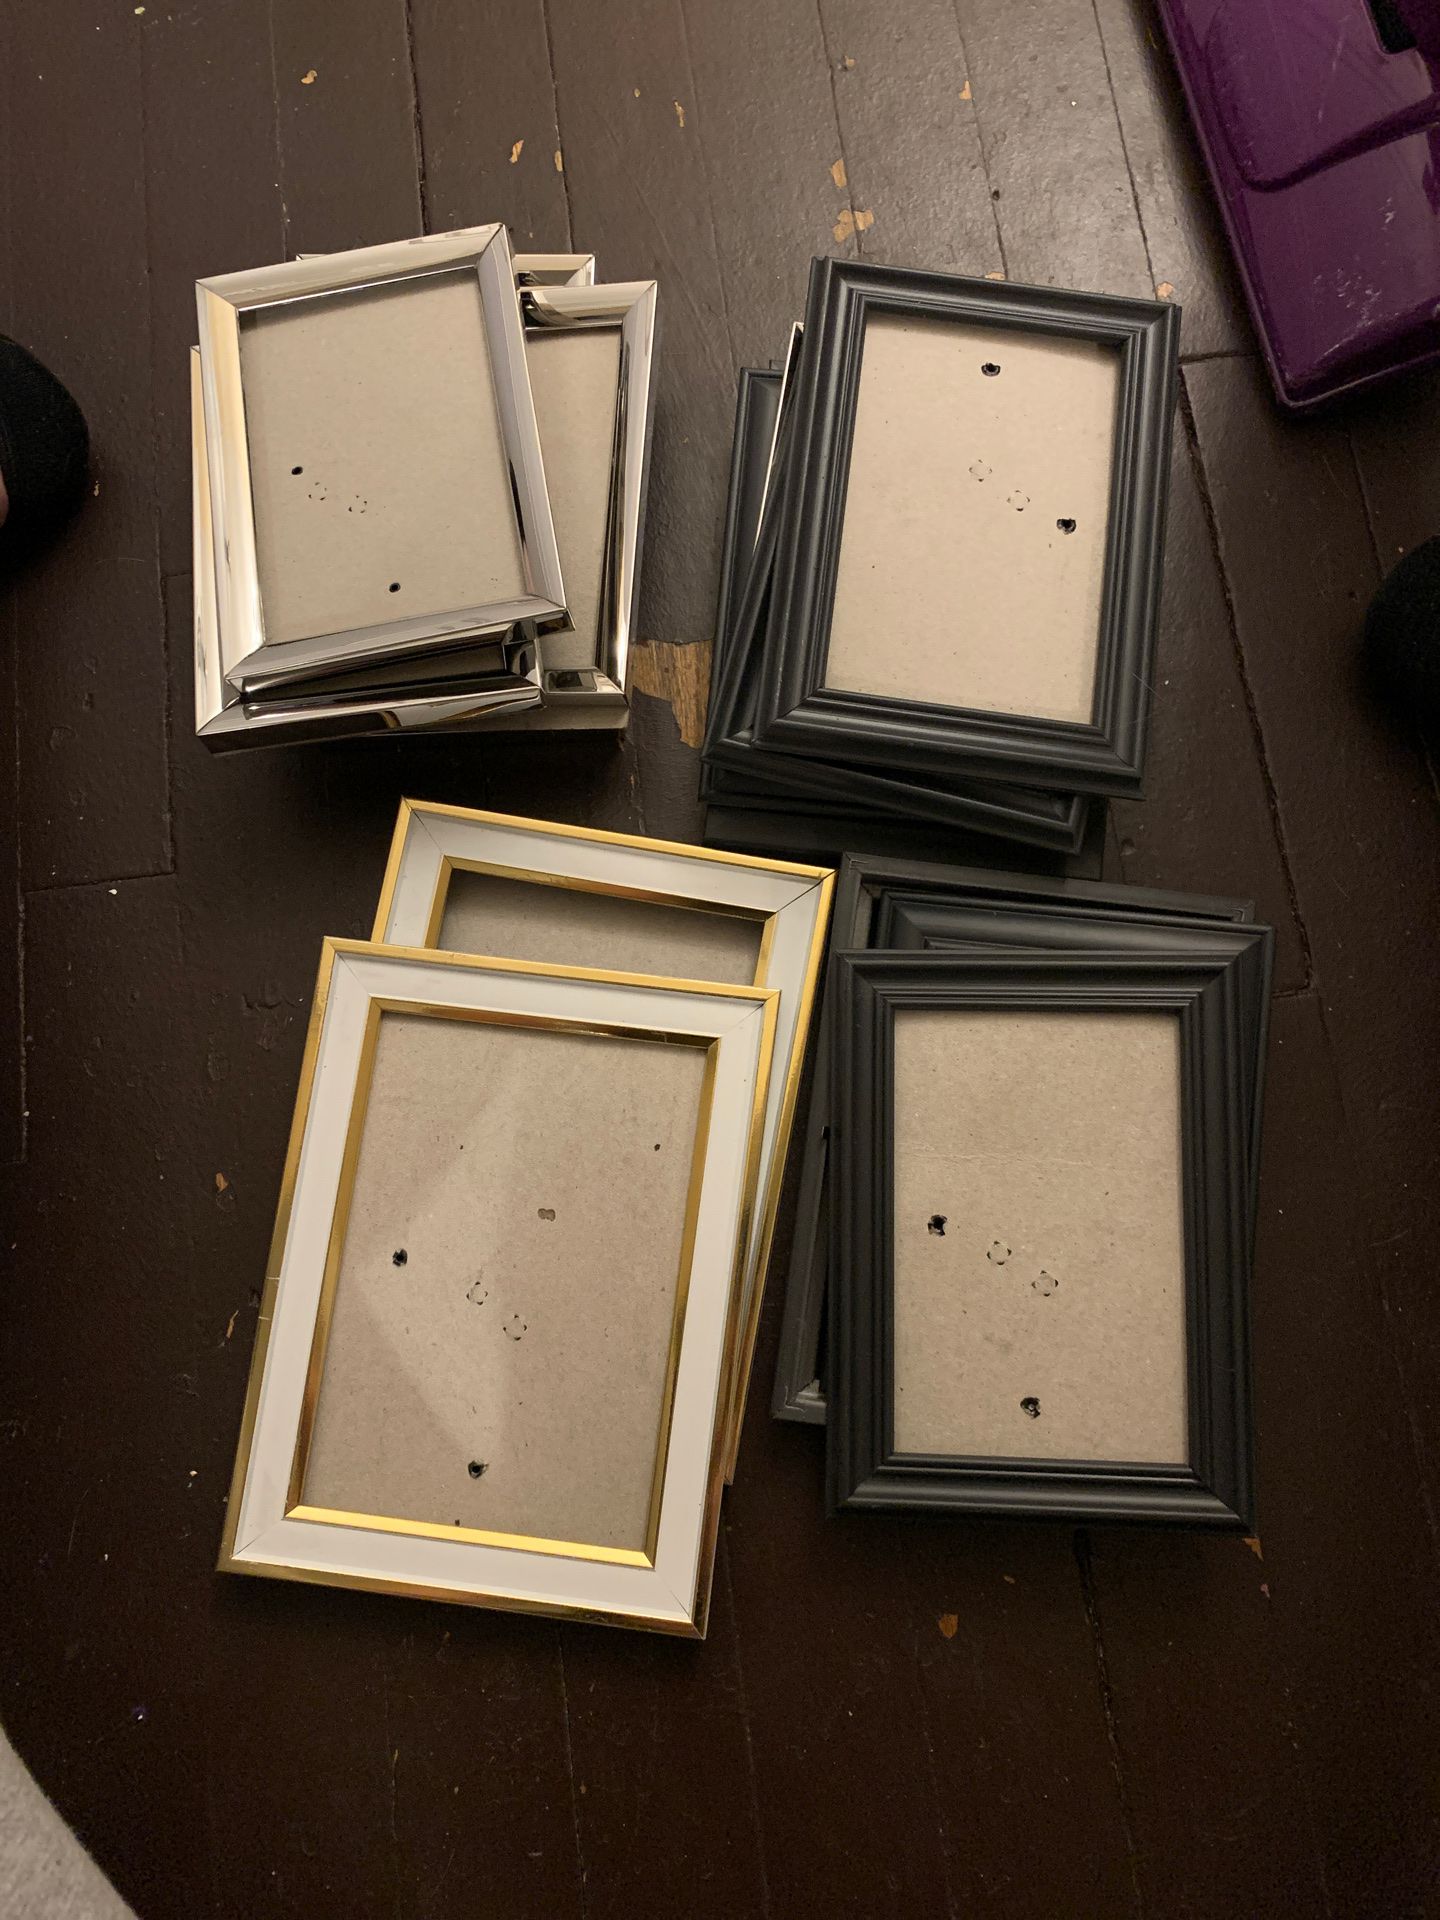 15 Crafting Frames